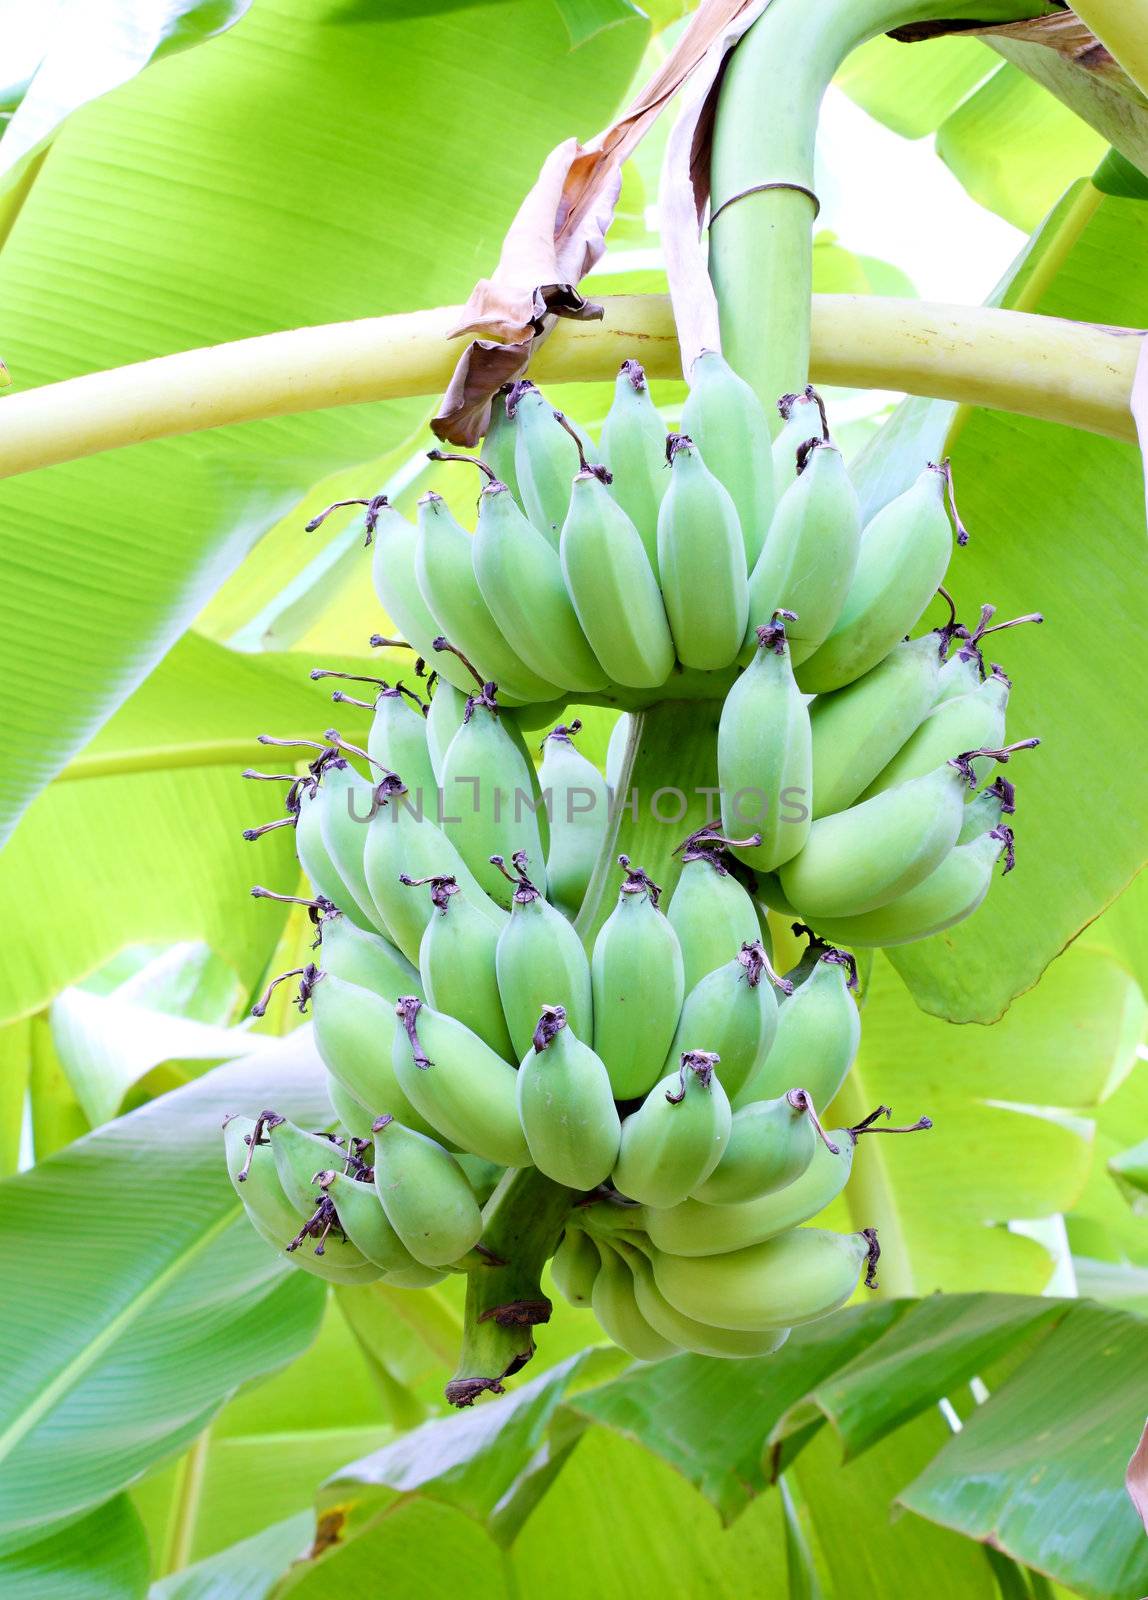 green bananas  by geargodz